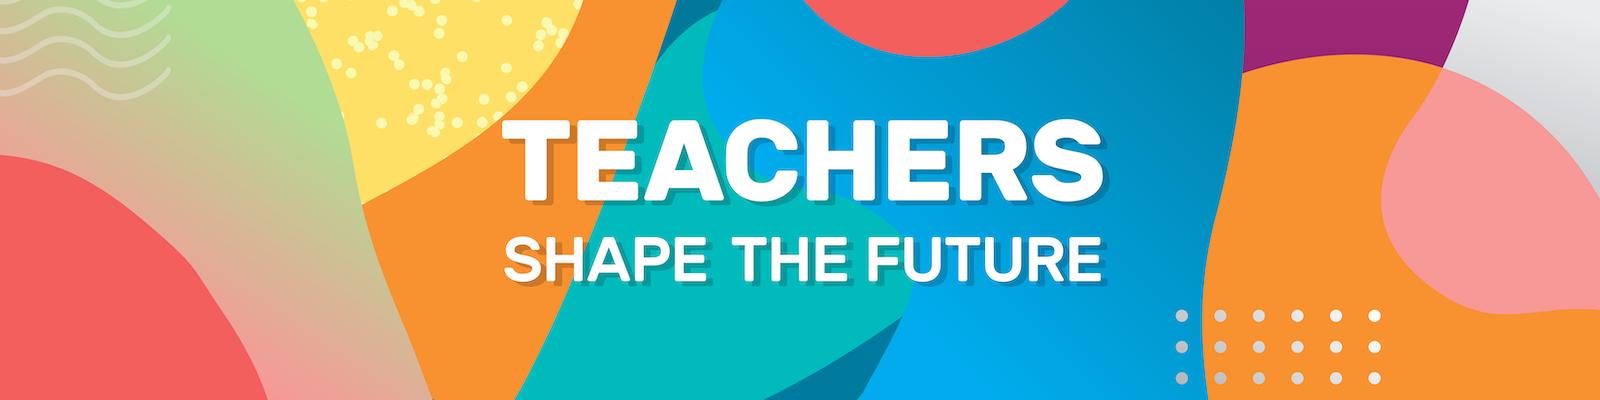 A LinkedIn cover image that says, "Teachers Shape the Future"